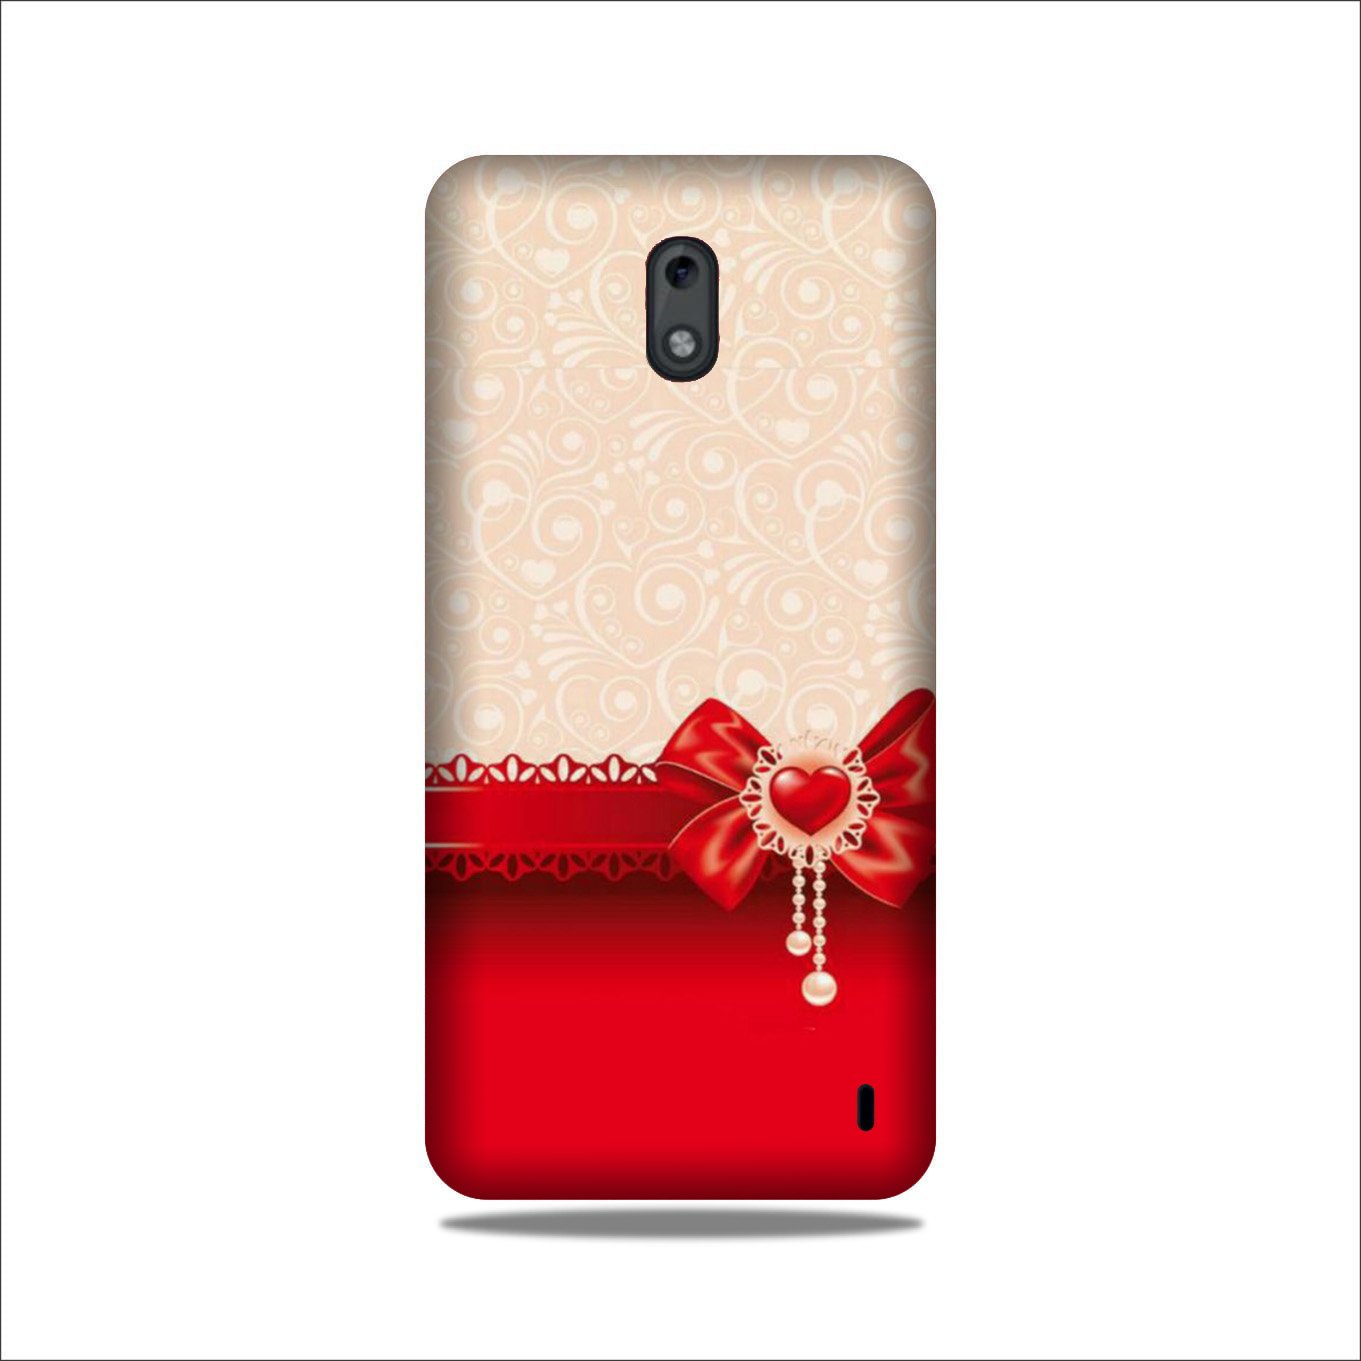 Gift Wrap3 Case for Nokia 2